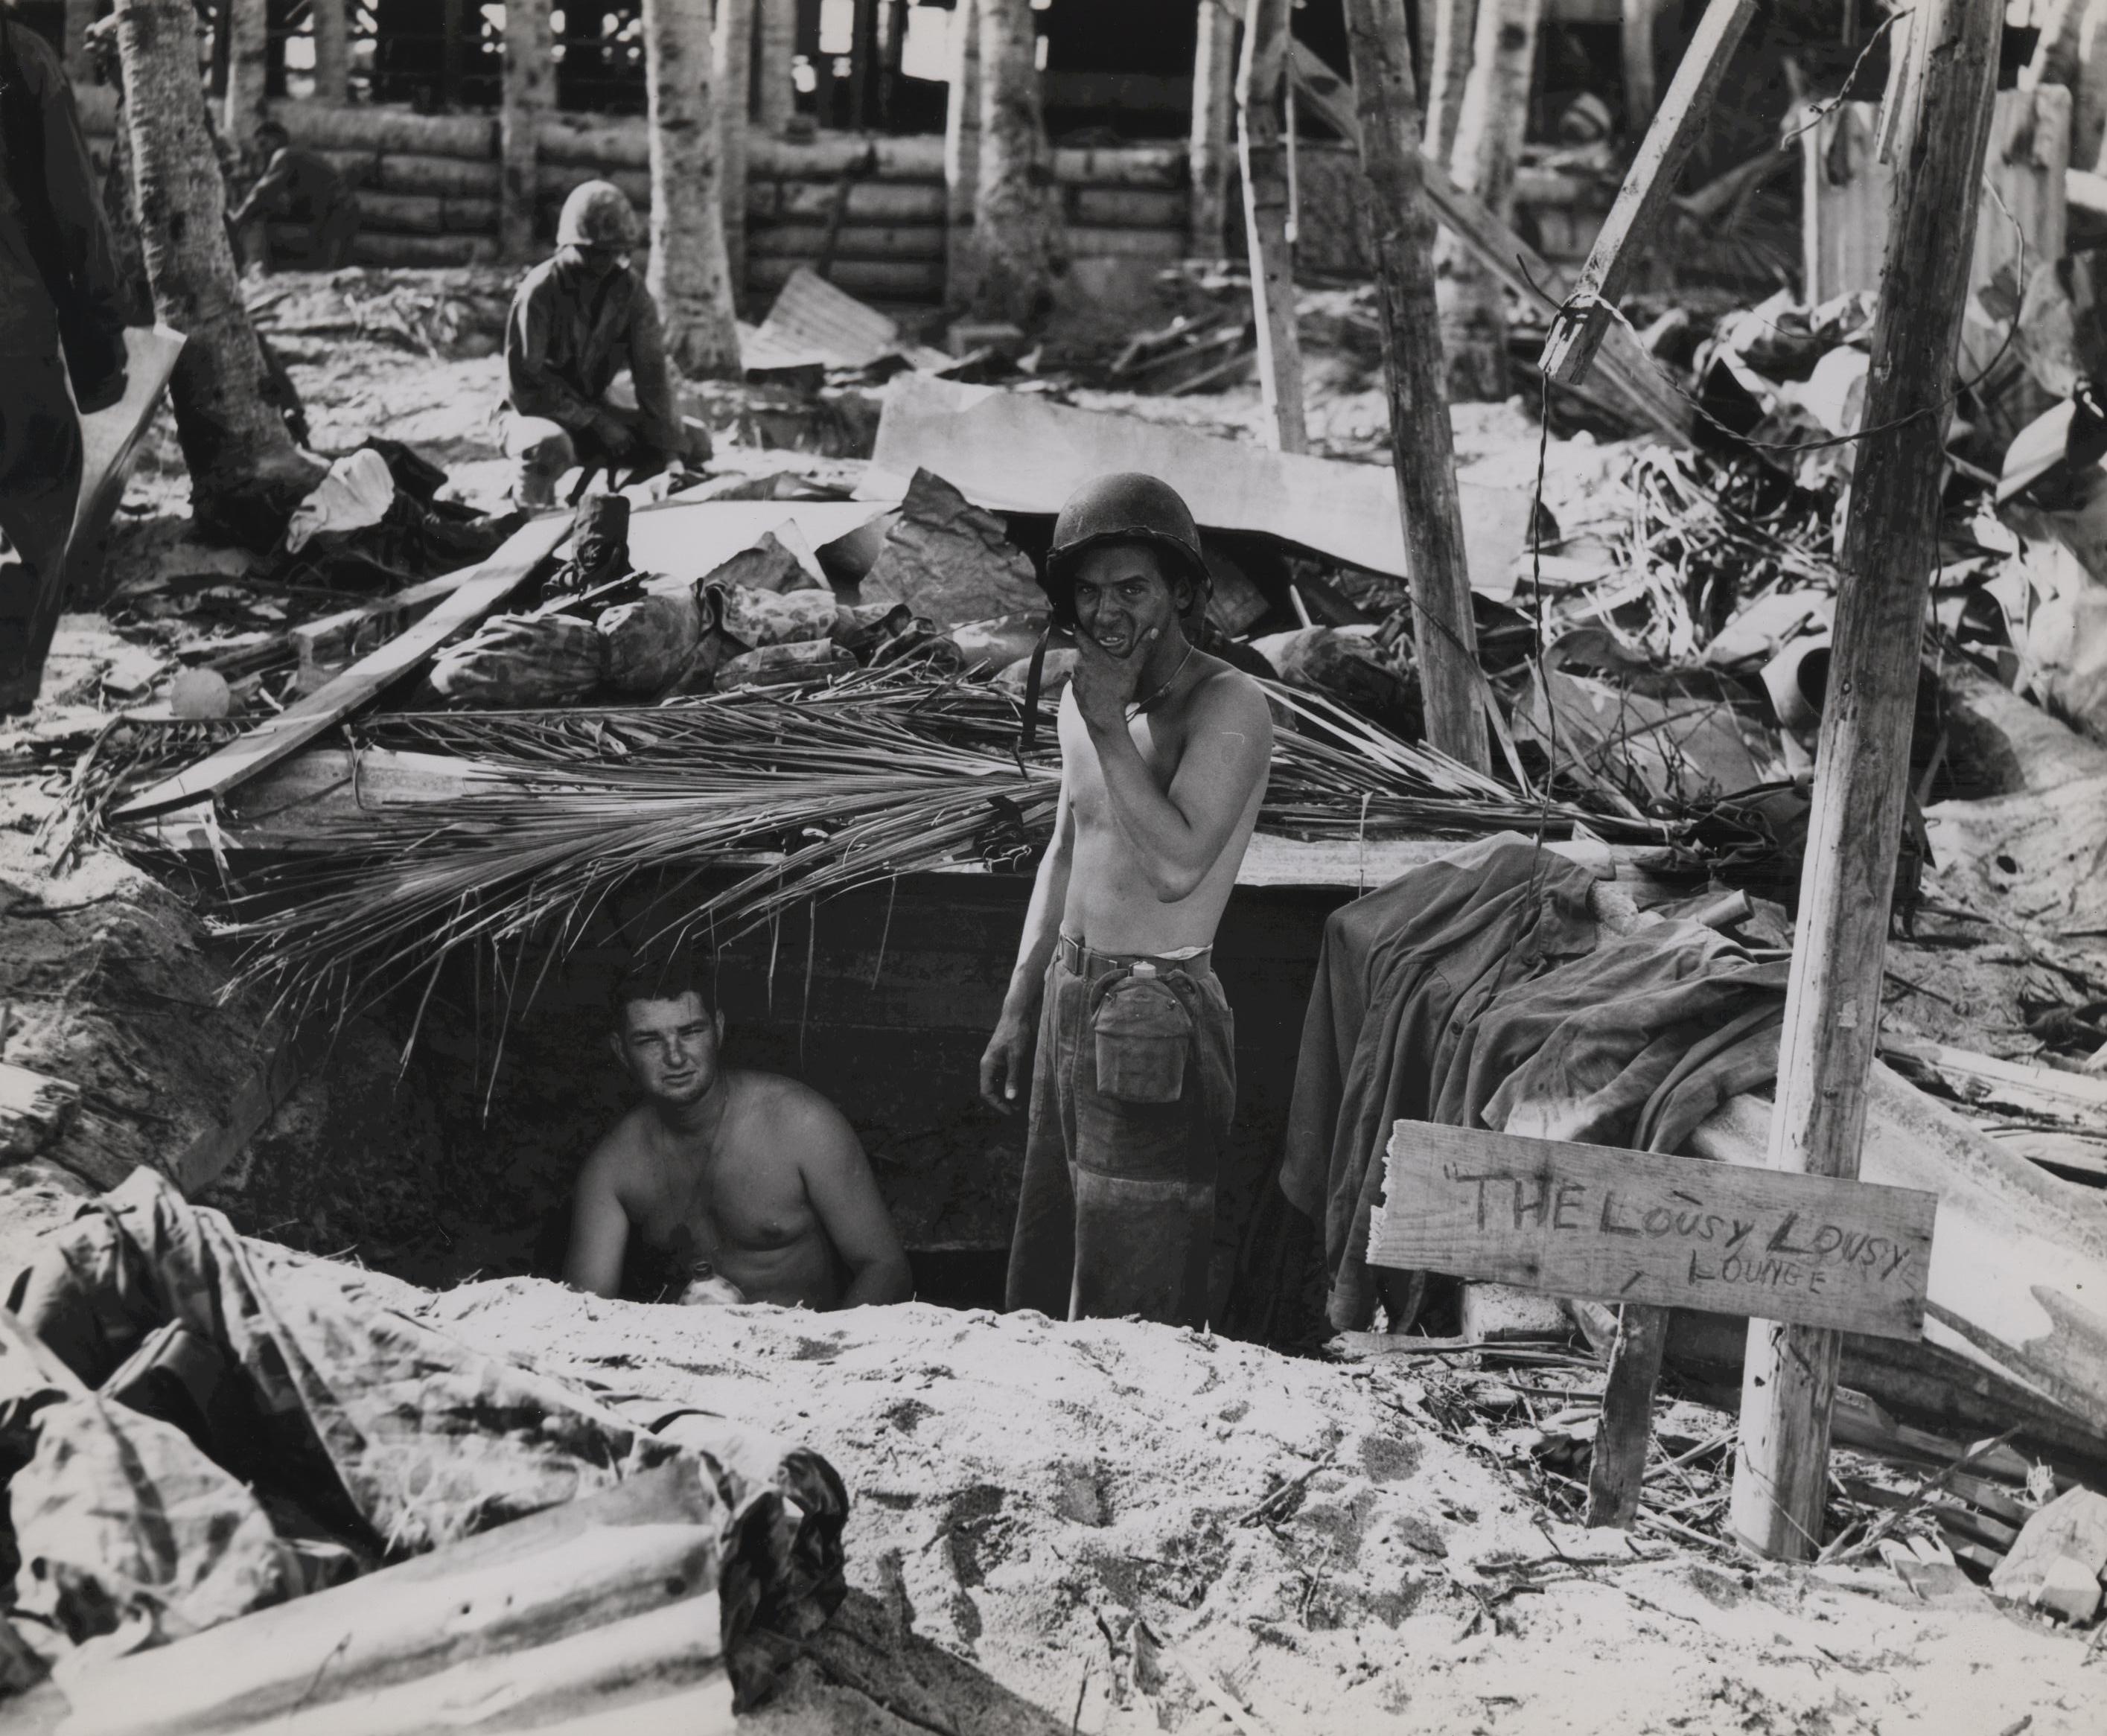 American base at Tarawa, Gilbert Islands, Nov 1943; note sign 'The Lousy Lousy Lounge'